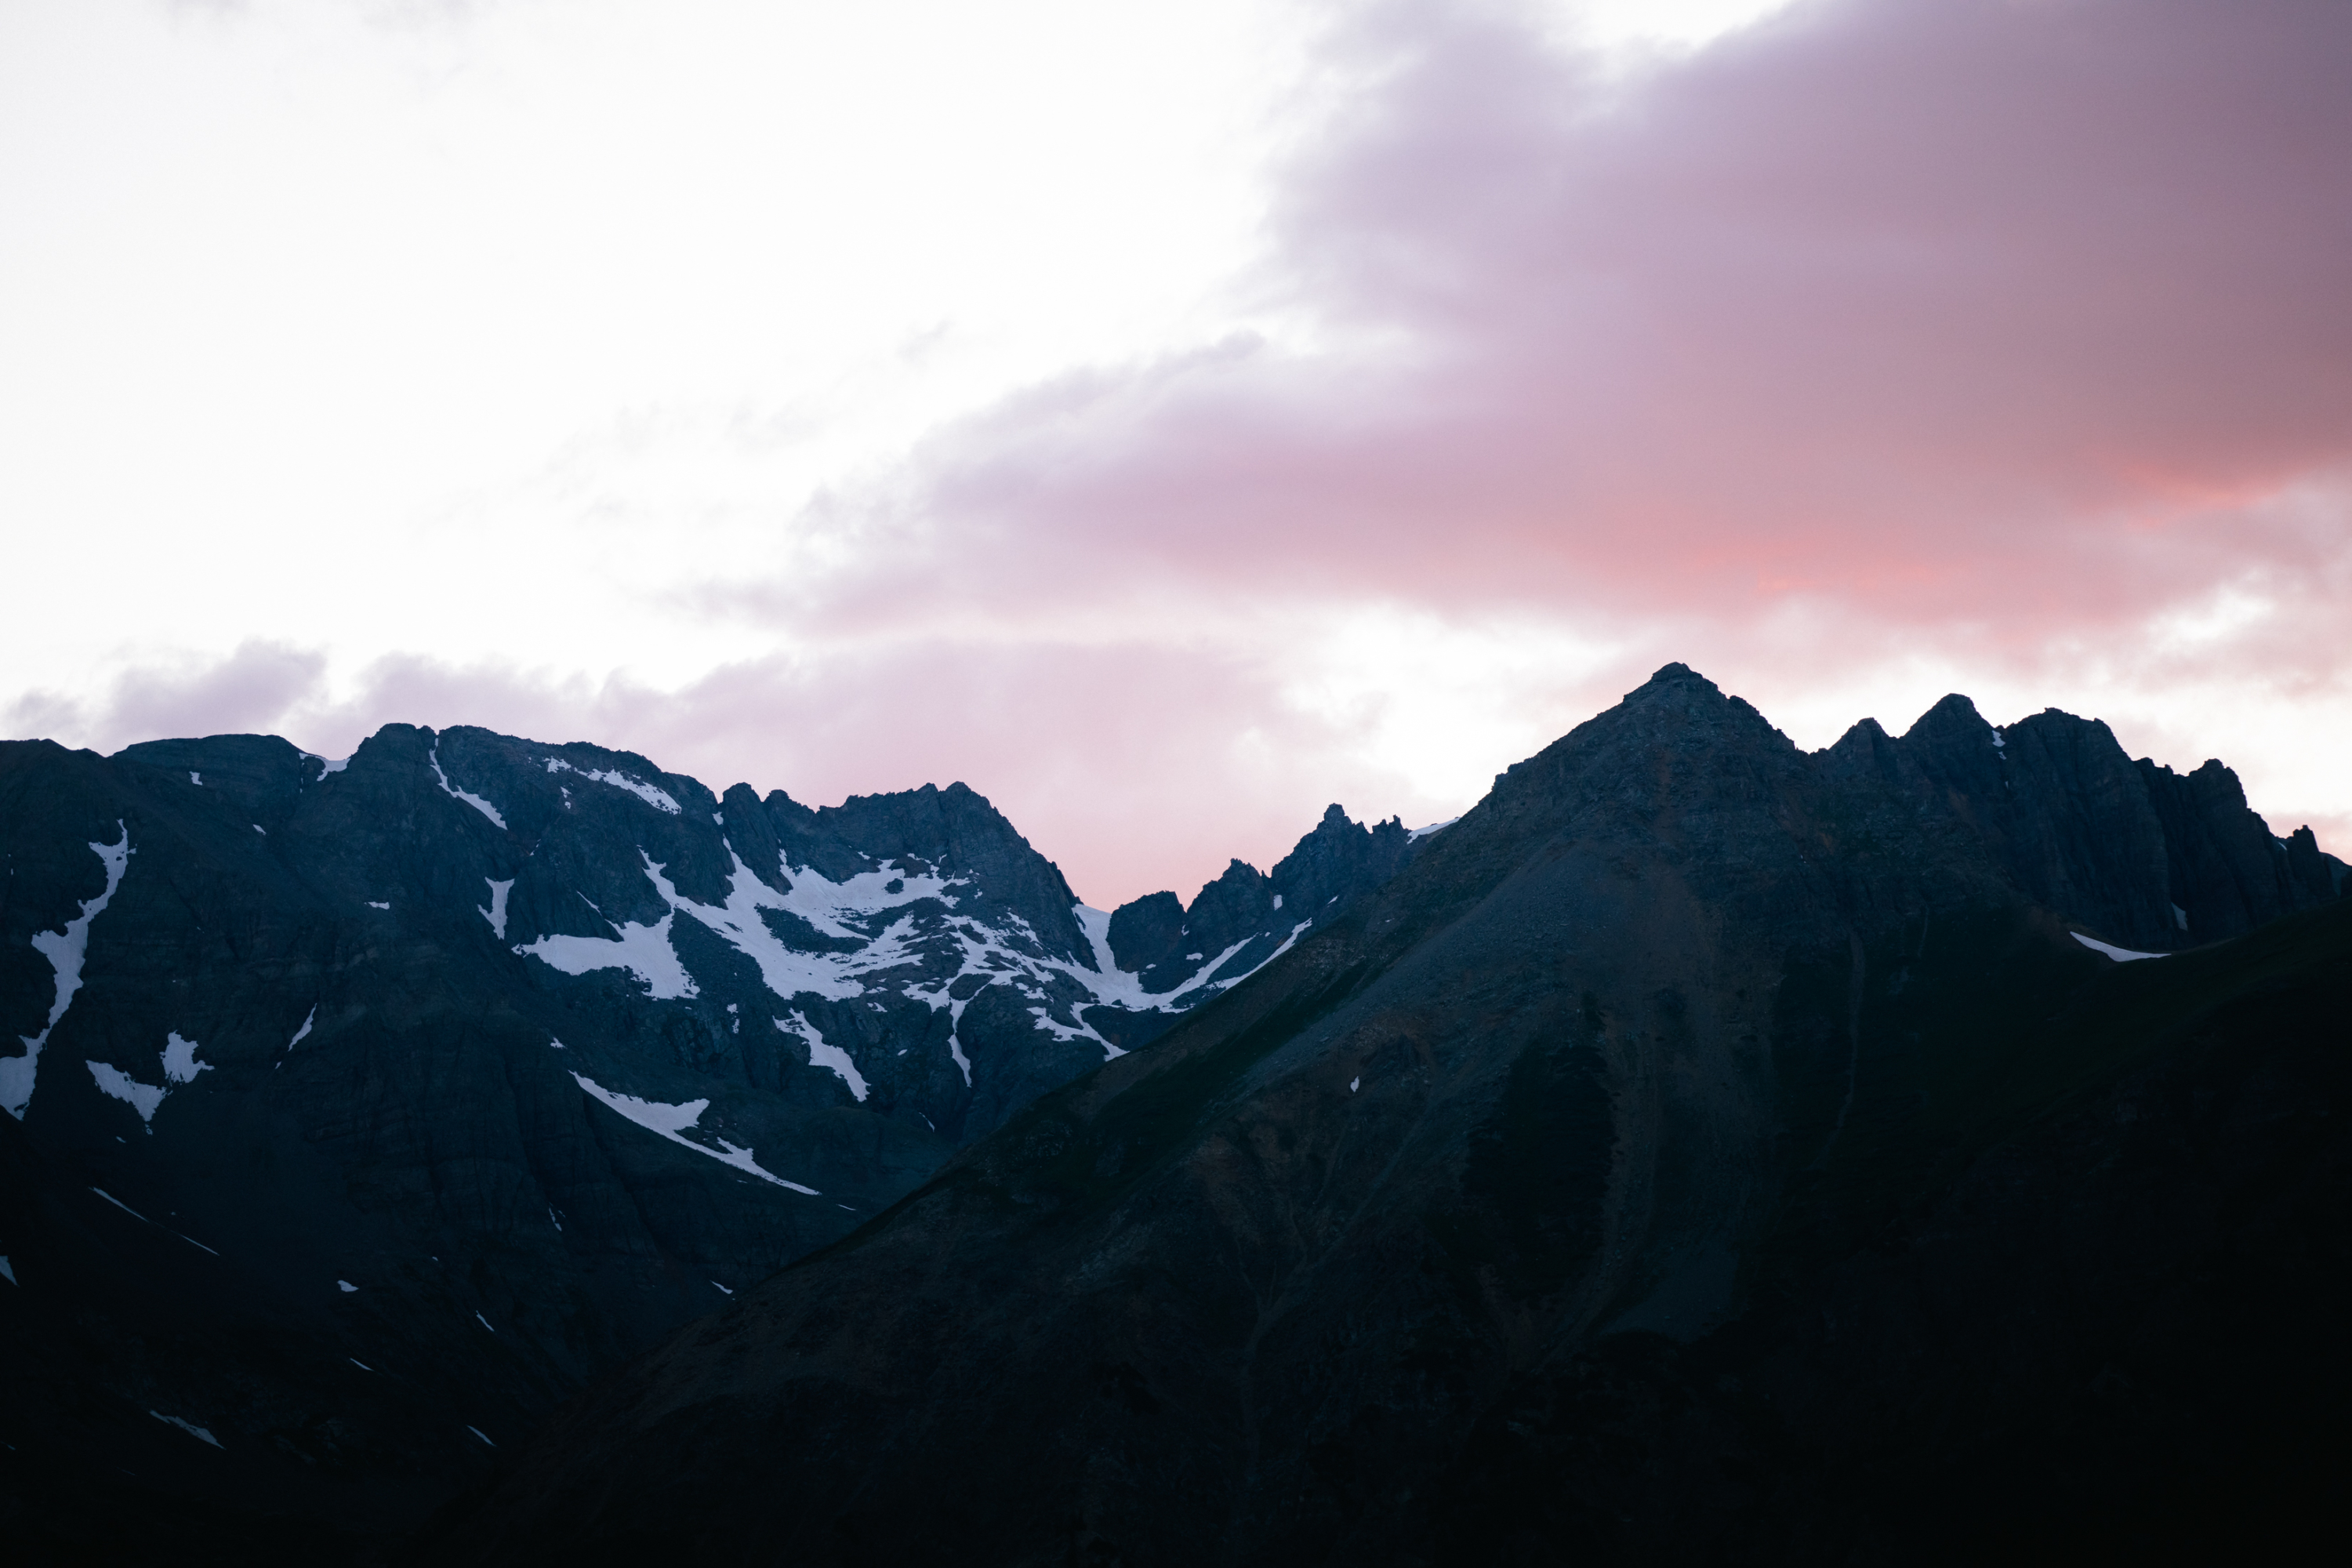 Aspen Mountain Elopement - The Bauers